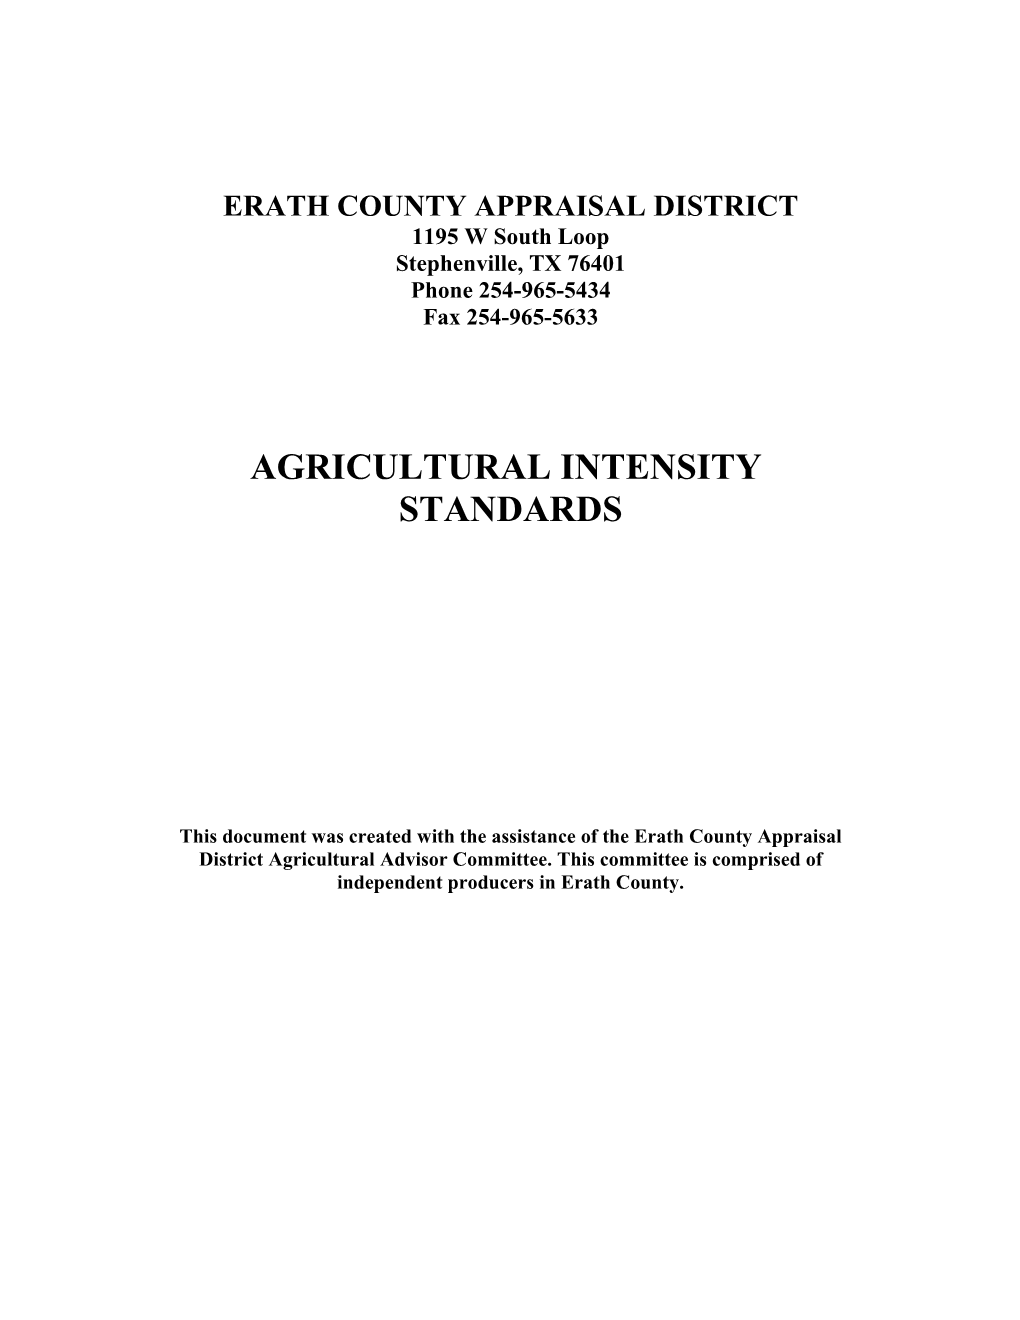 Erath County Appraisal District